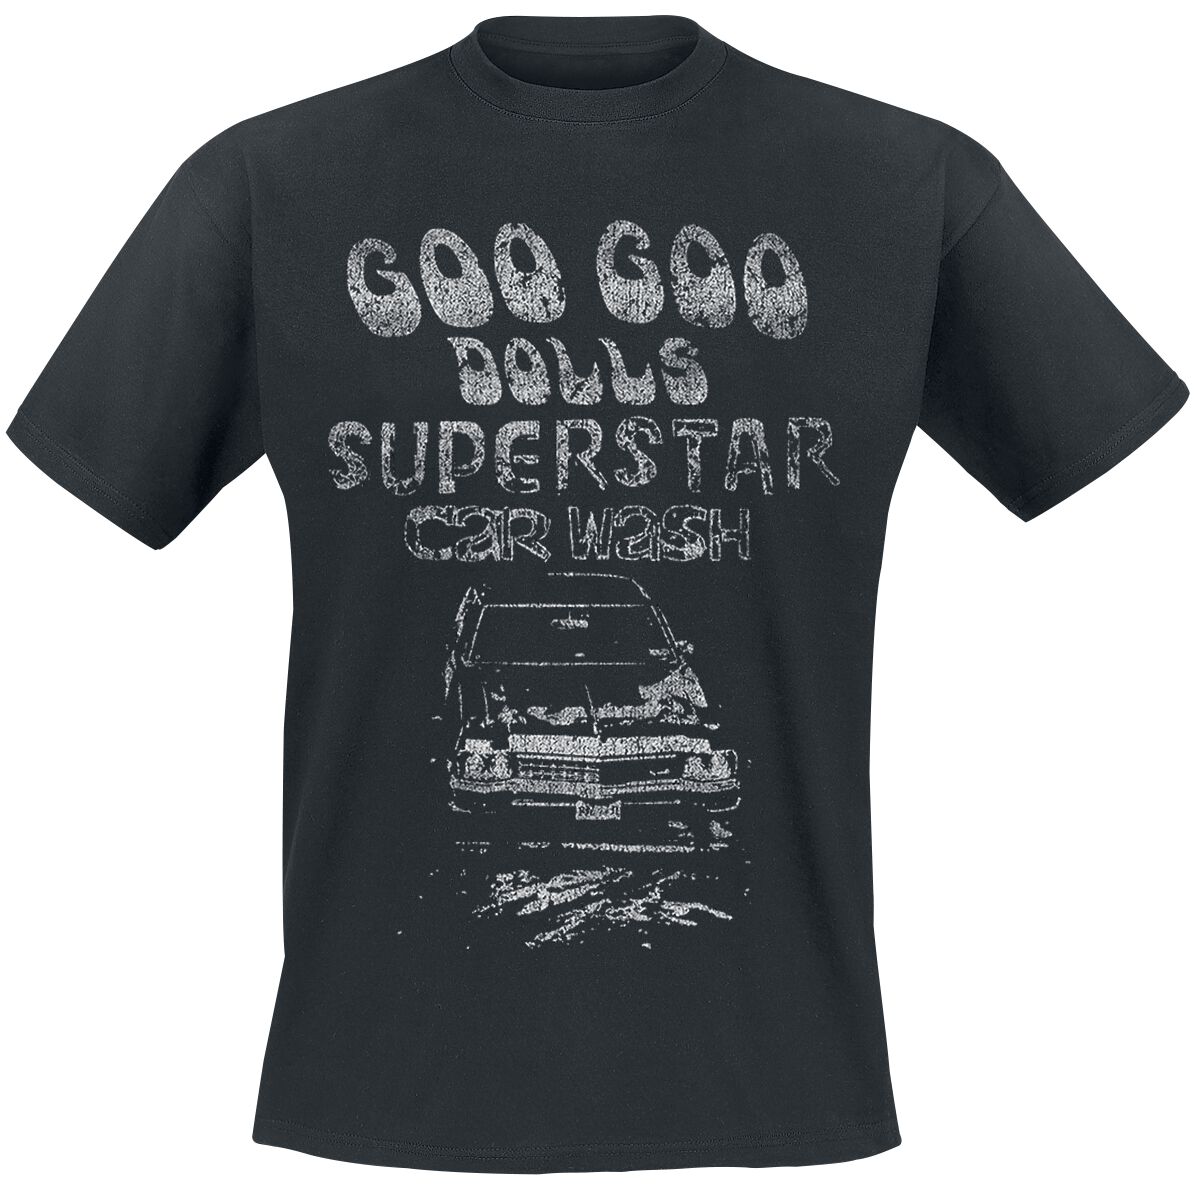 Goo Goo Dolls Superstar Auto T-Shirt black